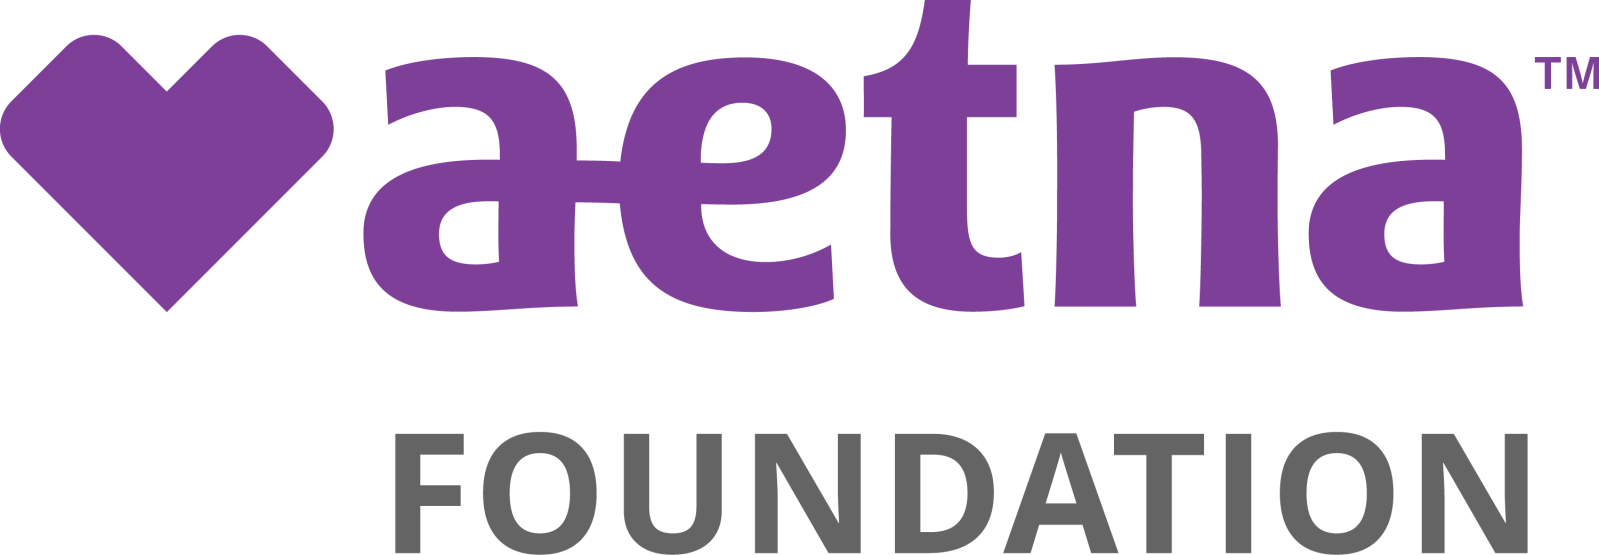 Aetna Foundation Logo